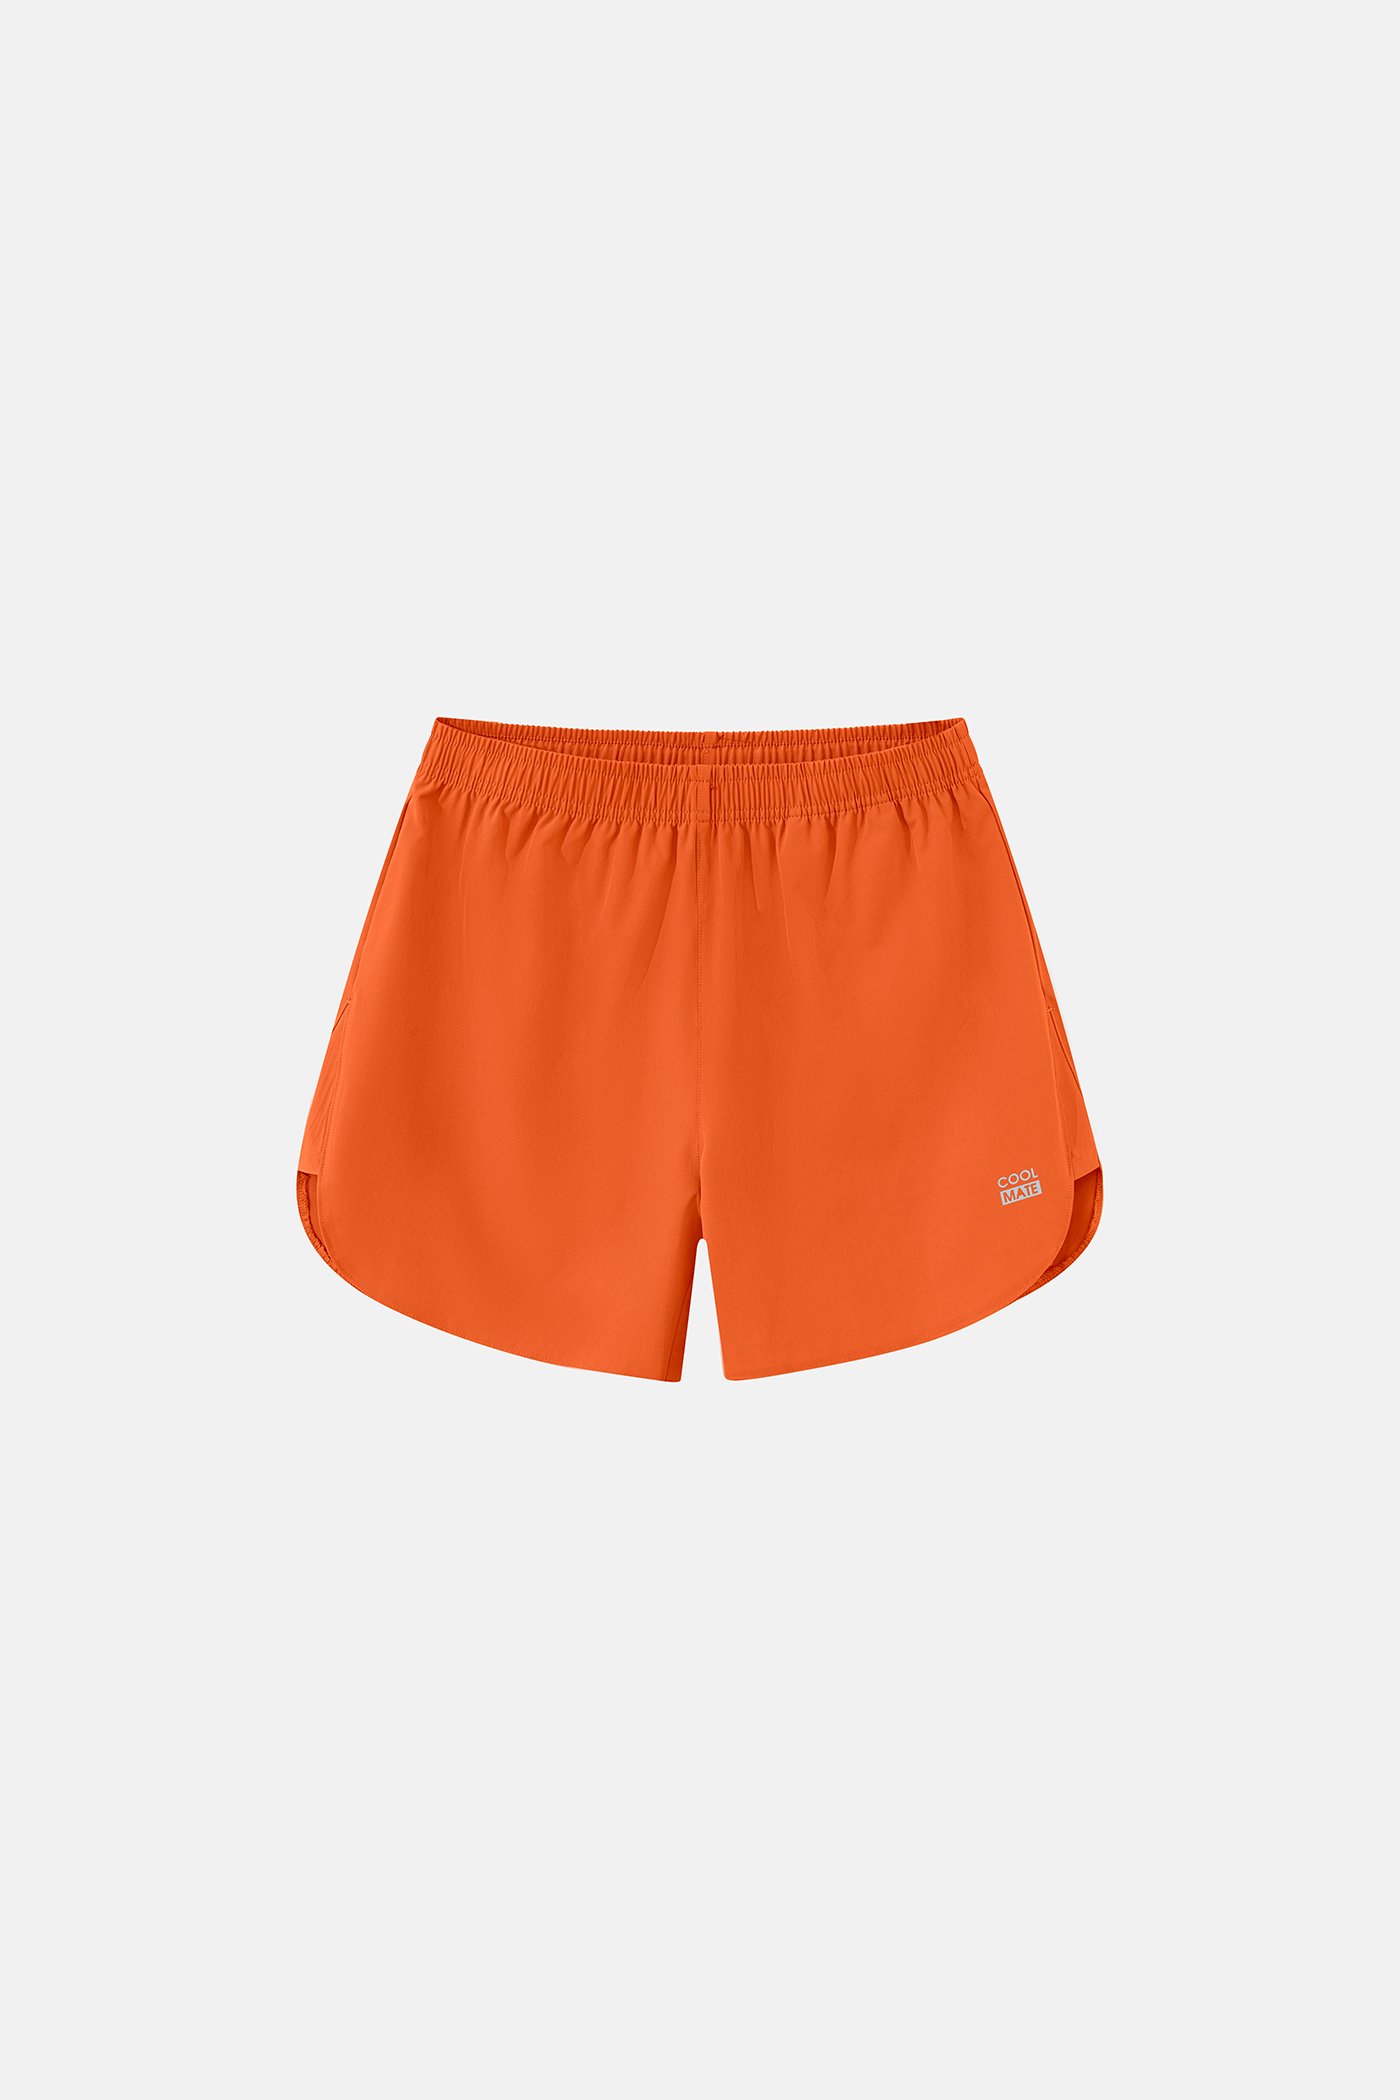 Combo 3 Shorts chạy bộ Basics  7